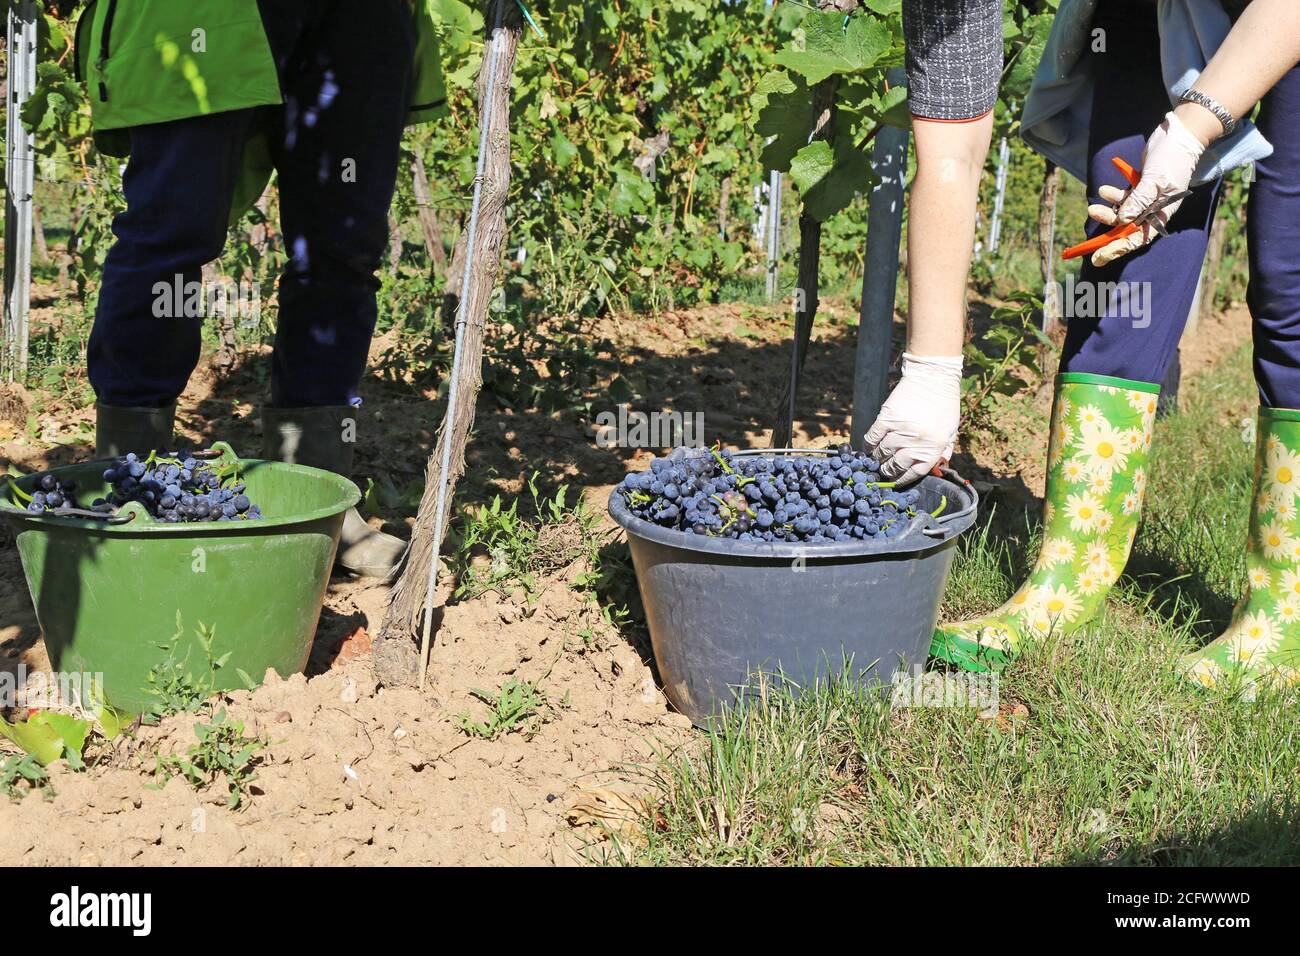 Manual grape harvesting, hand harvesting Stock Photo